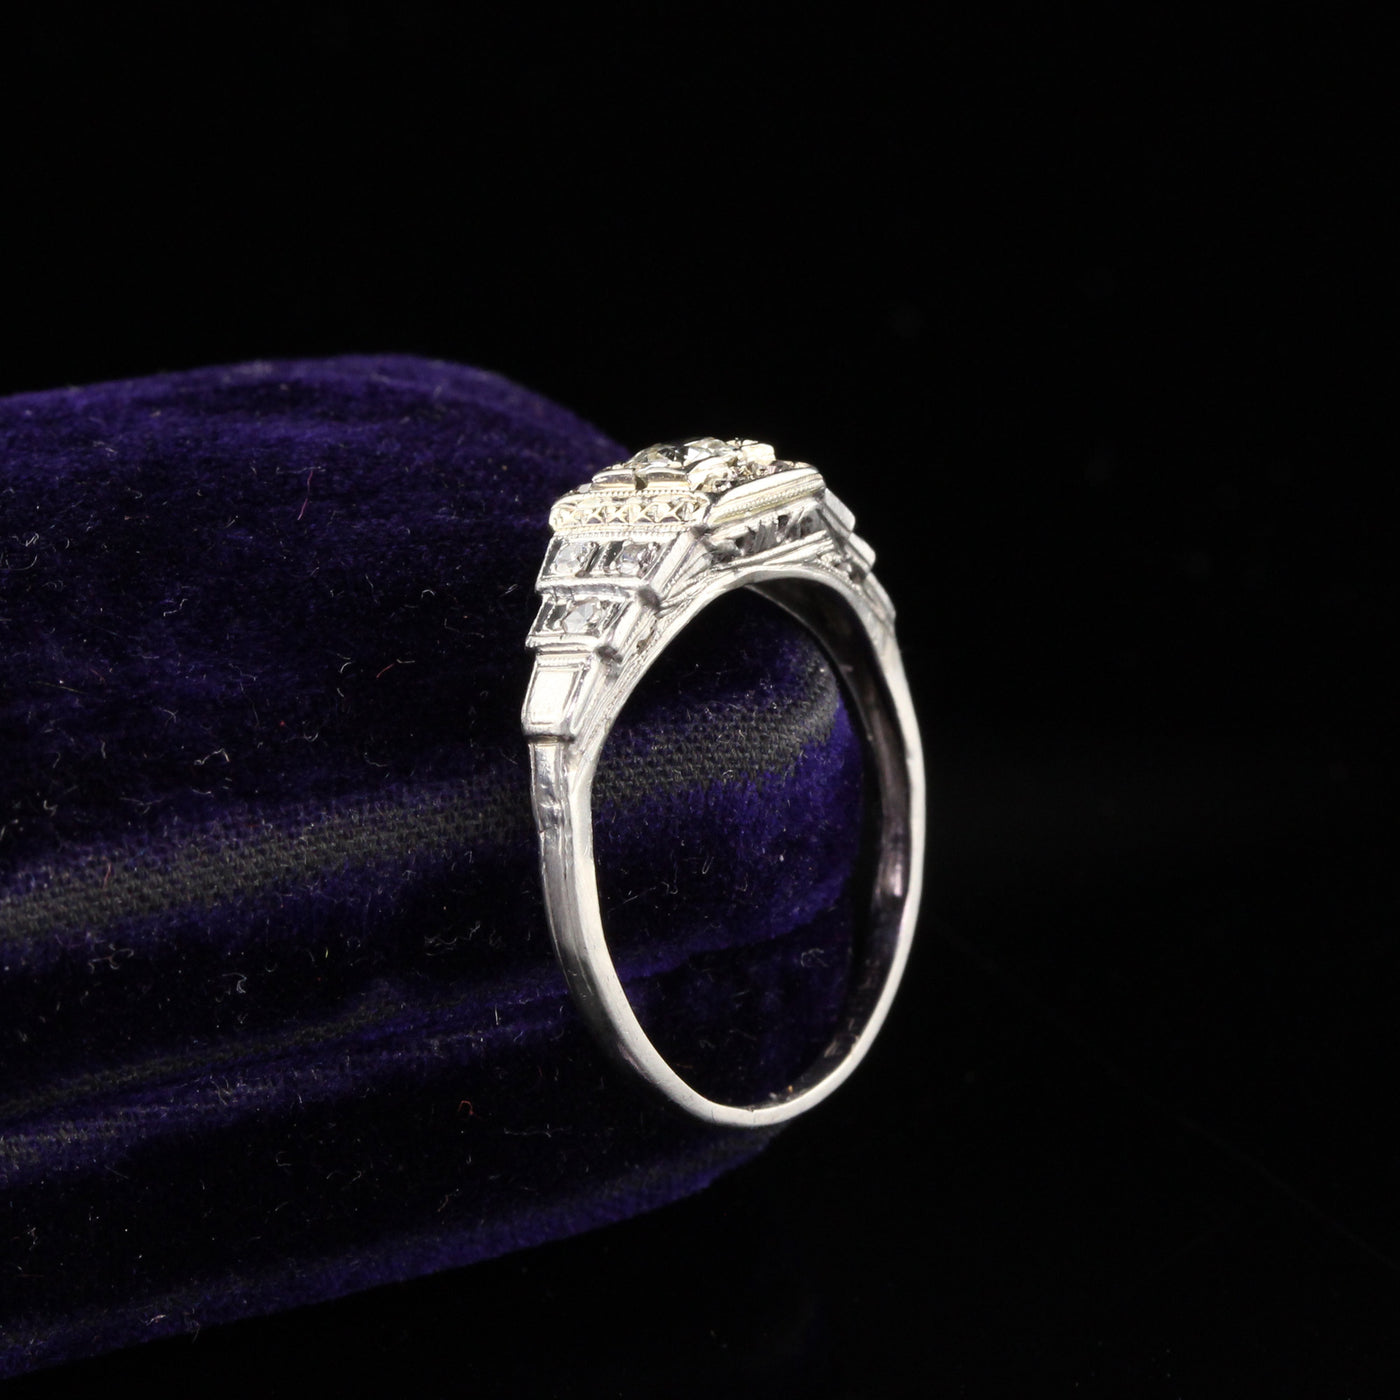 Antique Art Deco Platinum Engagement Ring - Size 6 1/2